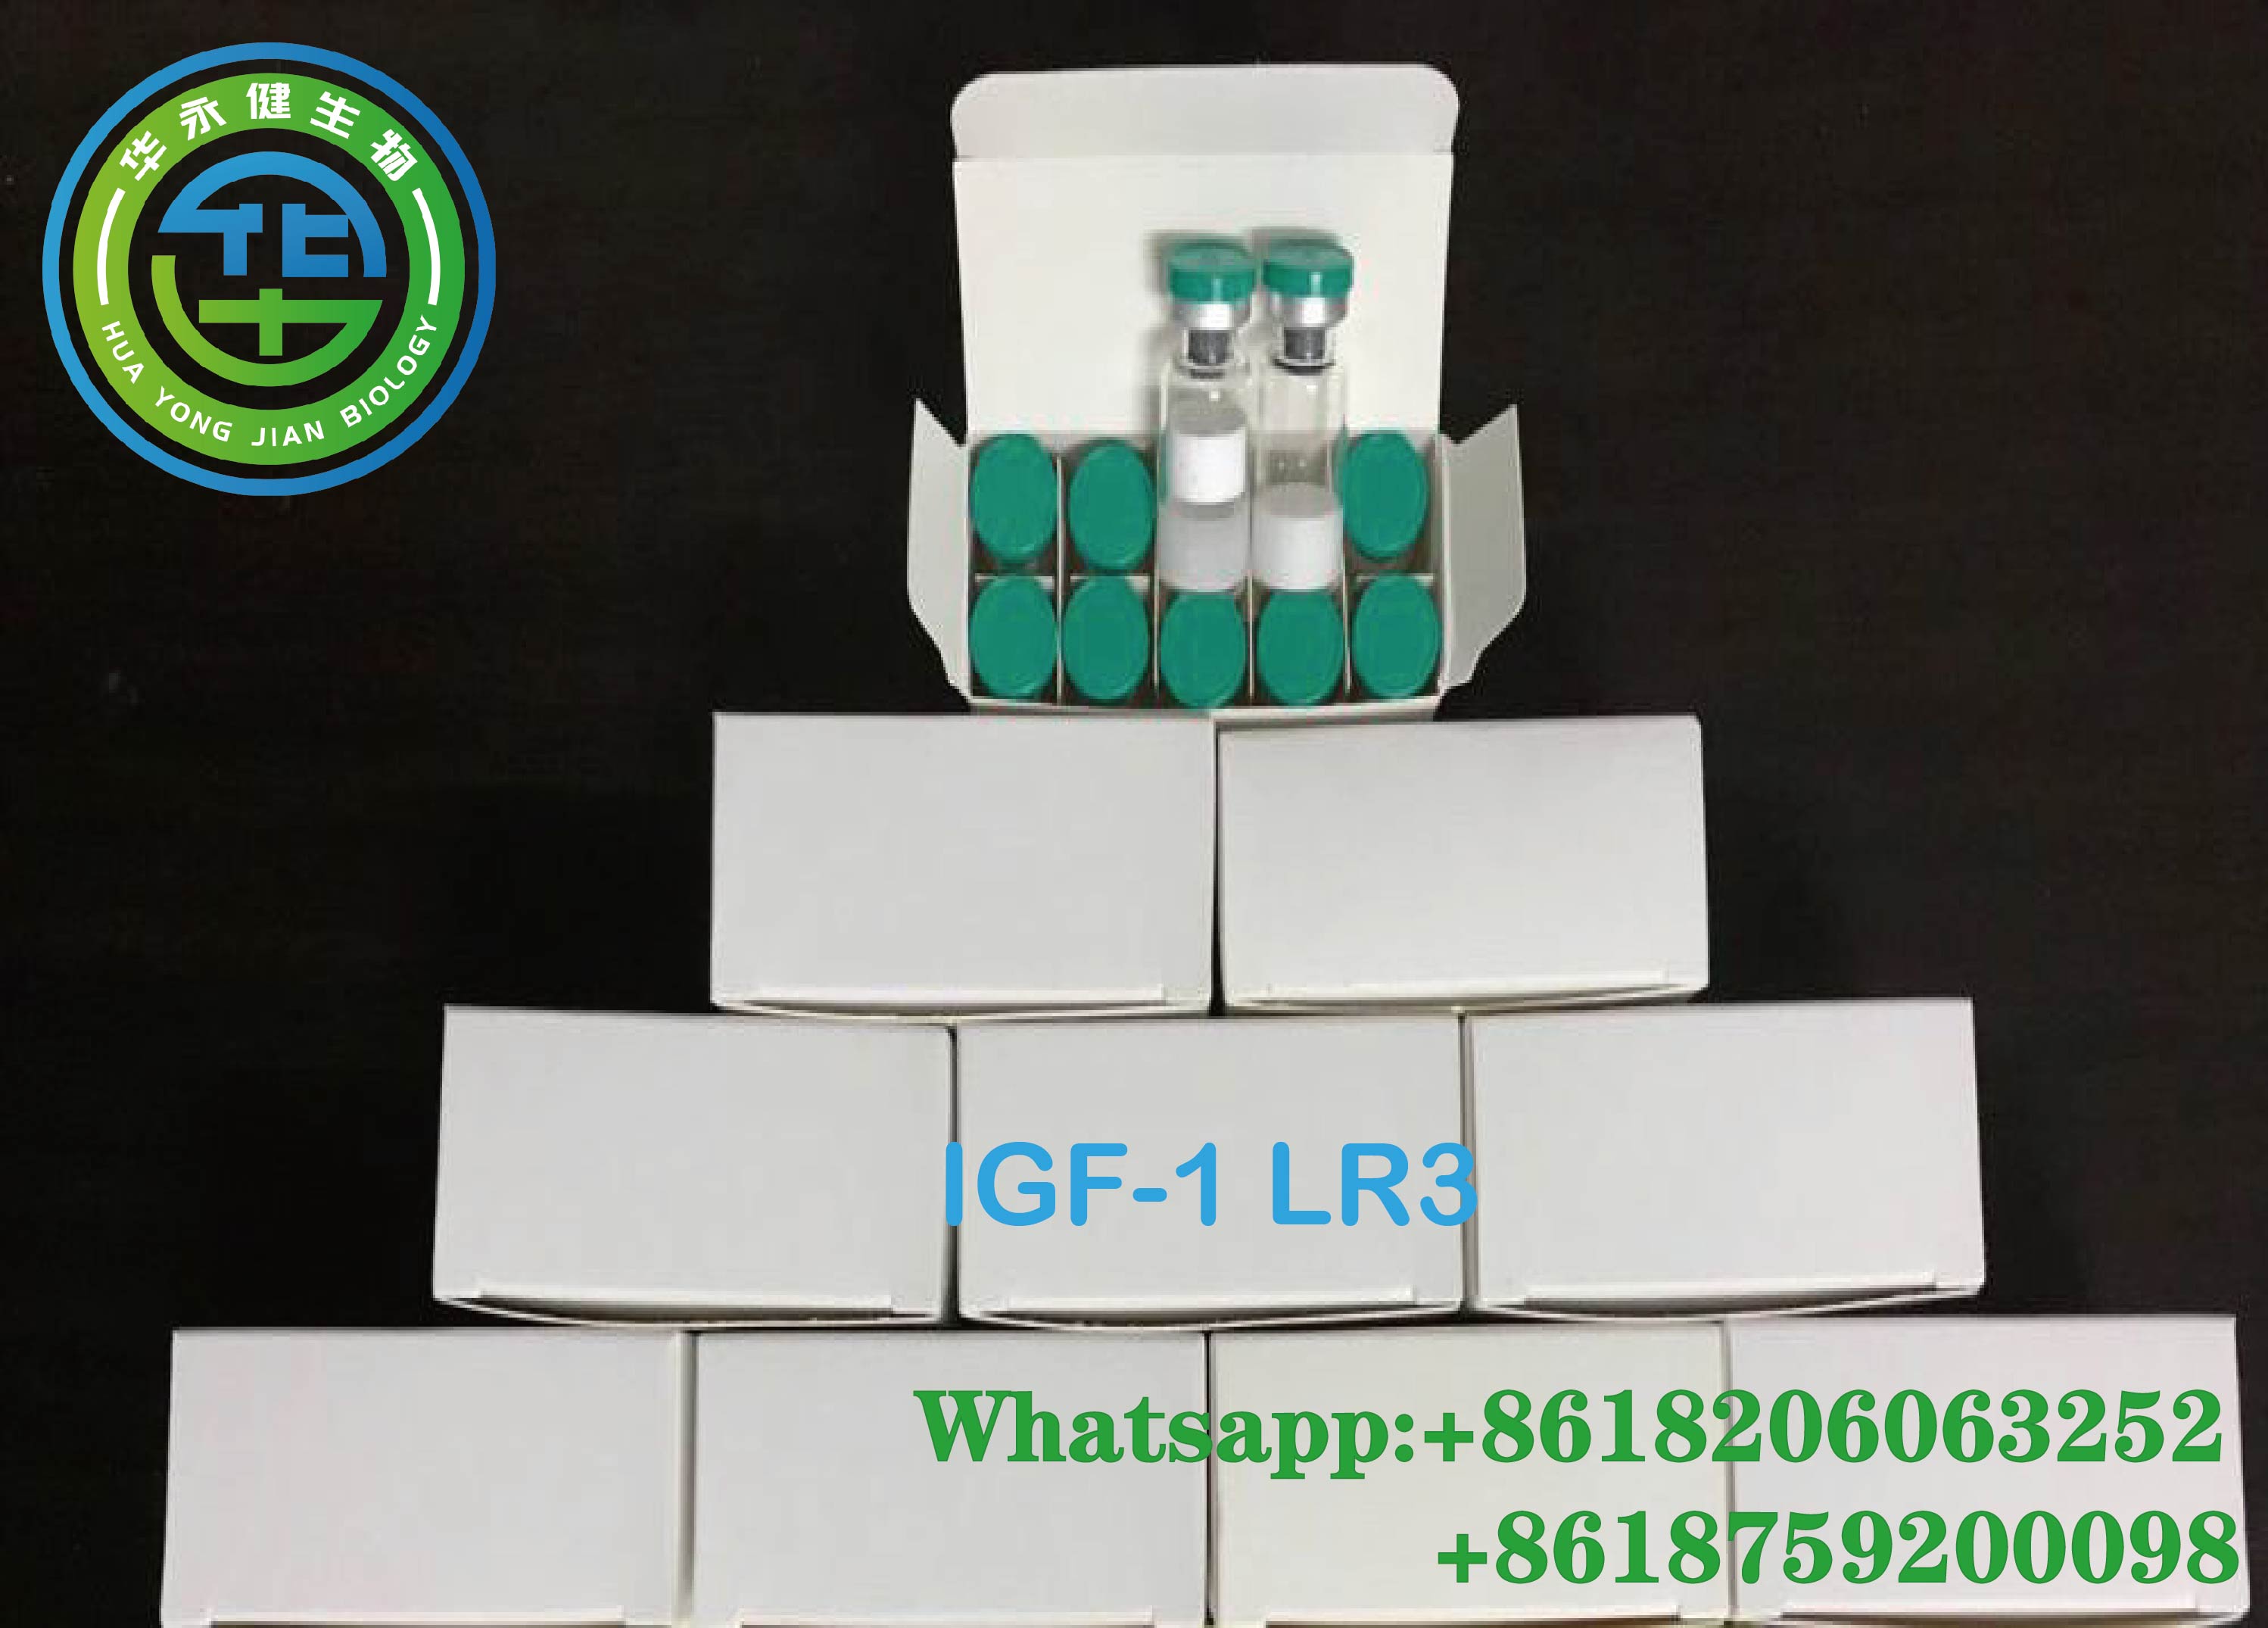 IGF-1 LR3 16